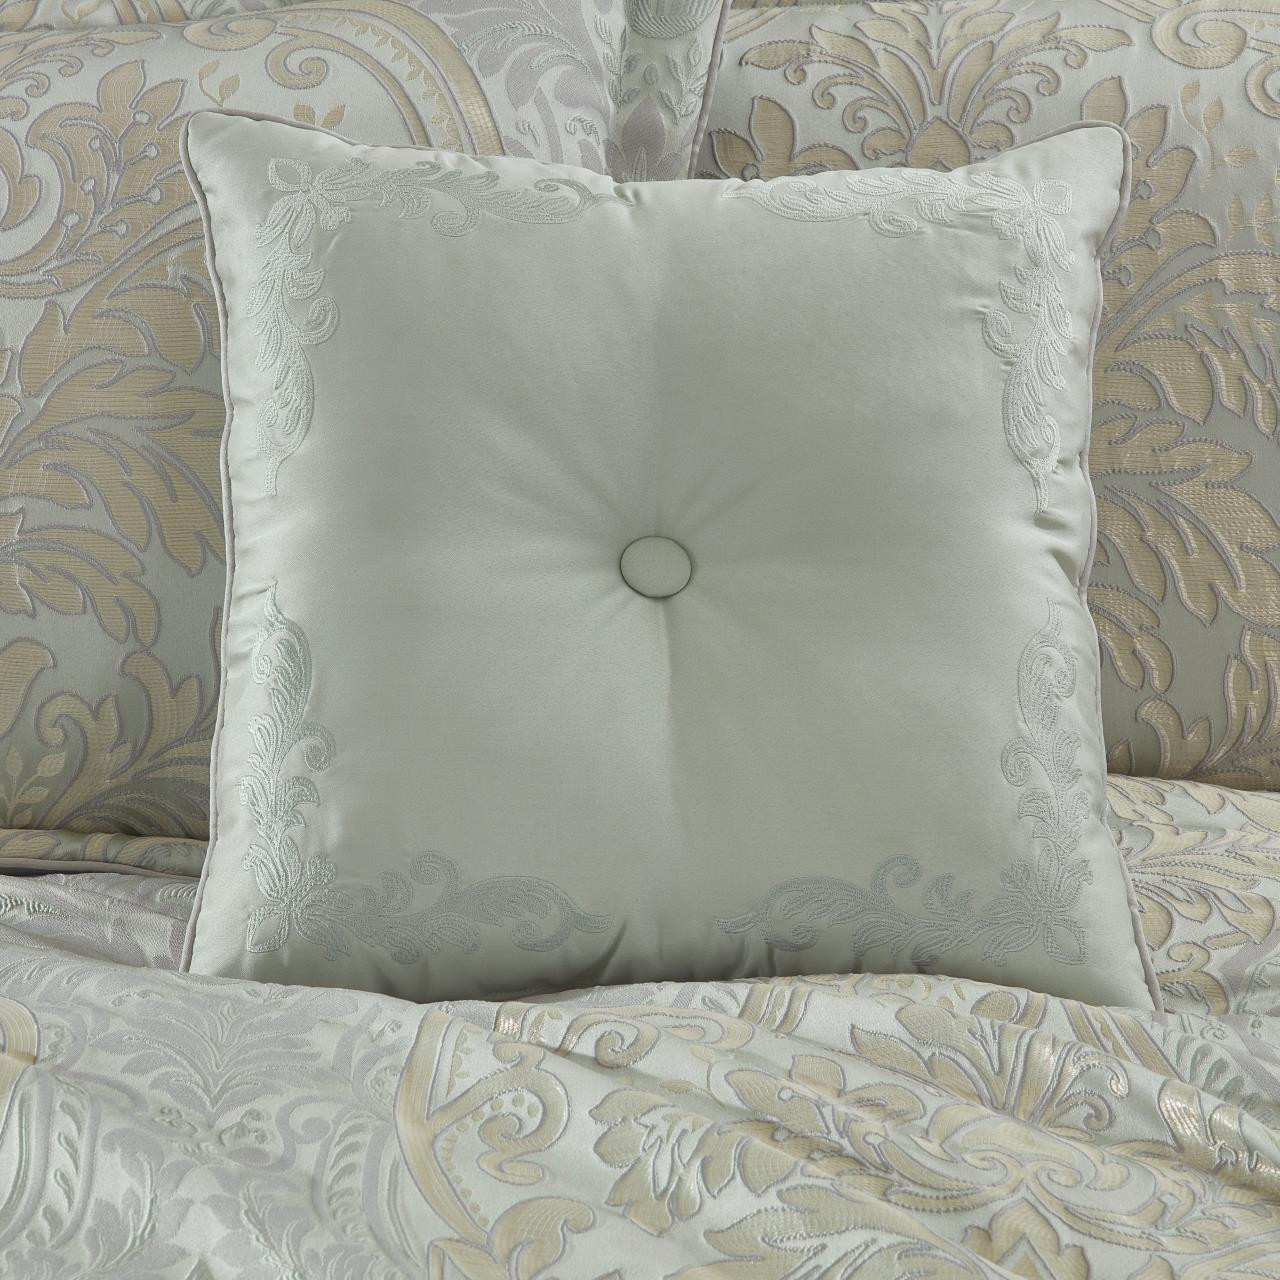 Belgium Spa 18" Square Embellished Pillow - 193842124550